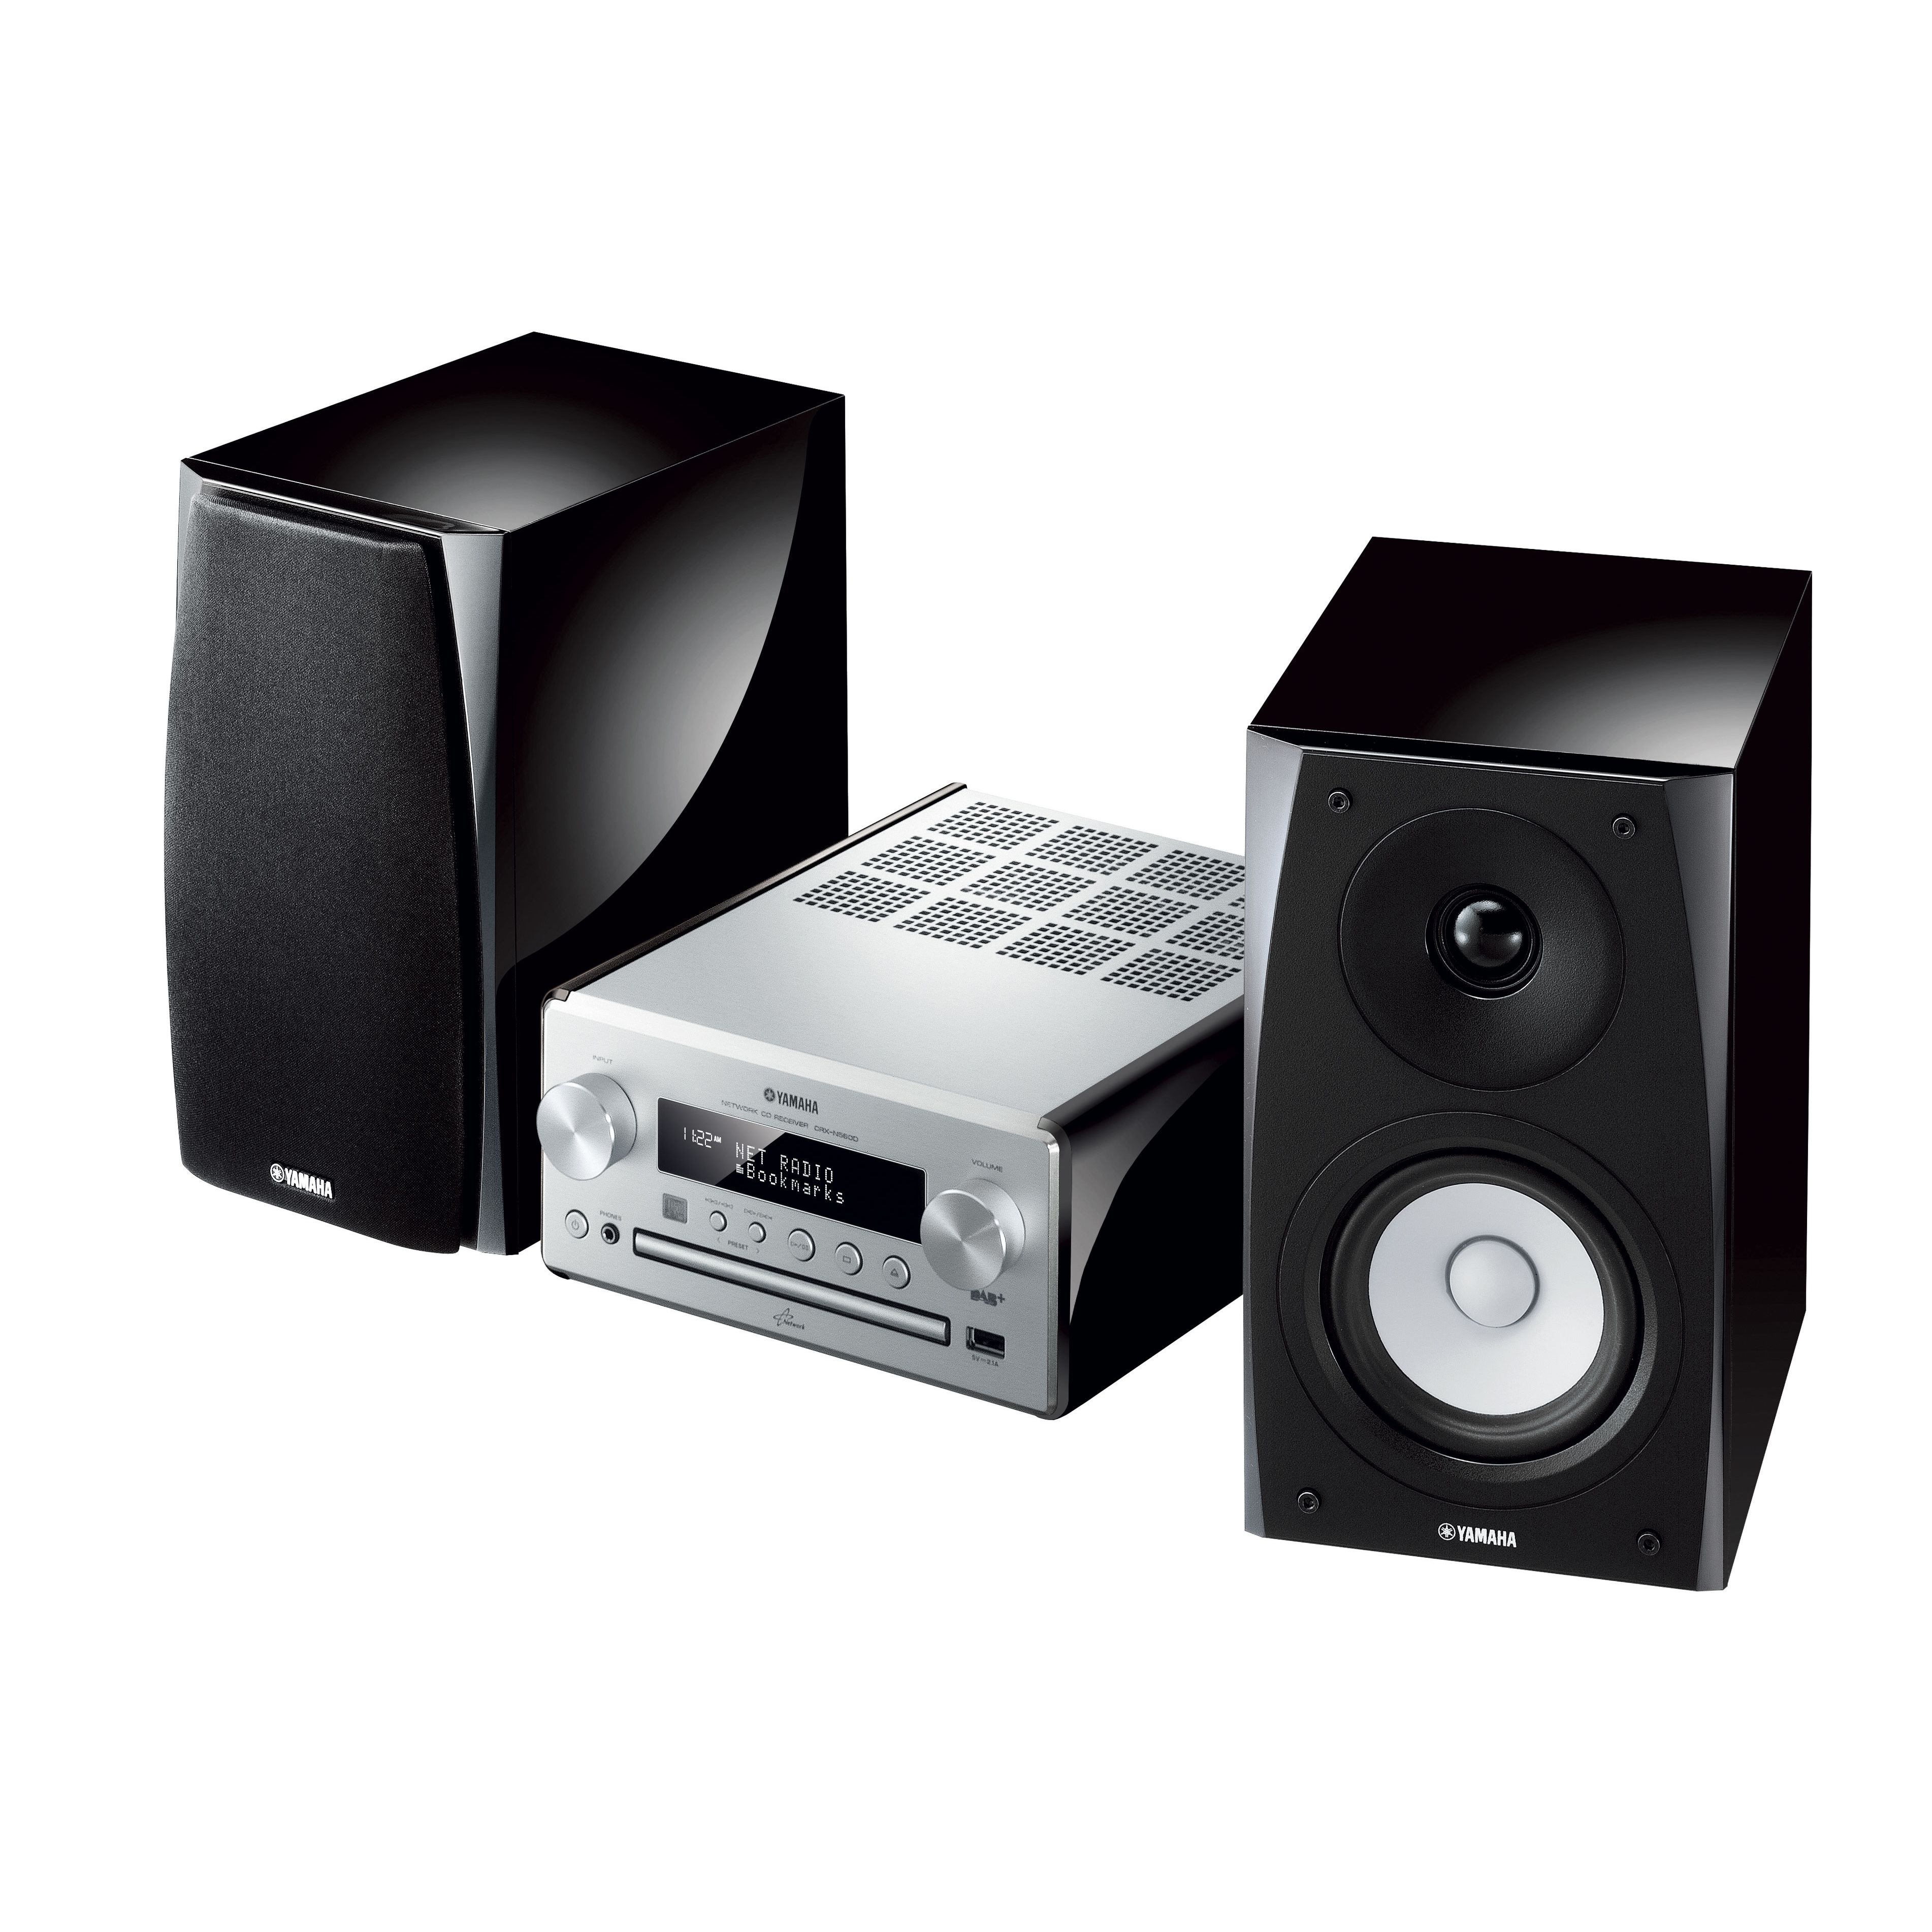 MCR-N560D - Panoramica - Sistemi HiFi - Audio & Video - Prodotti ...